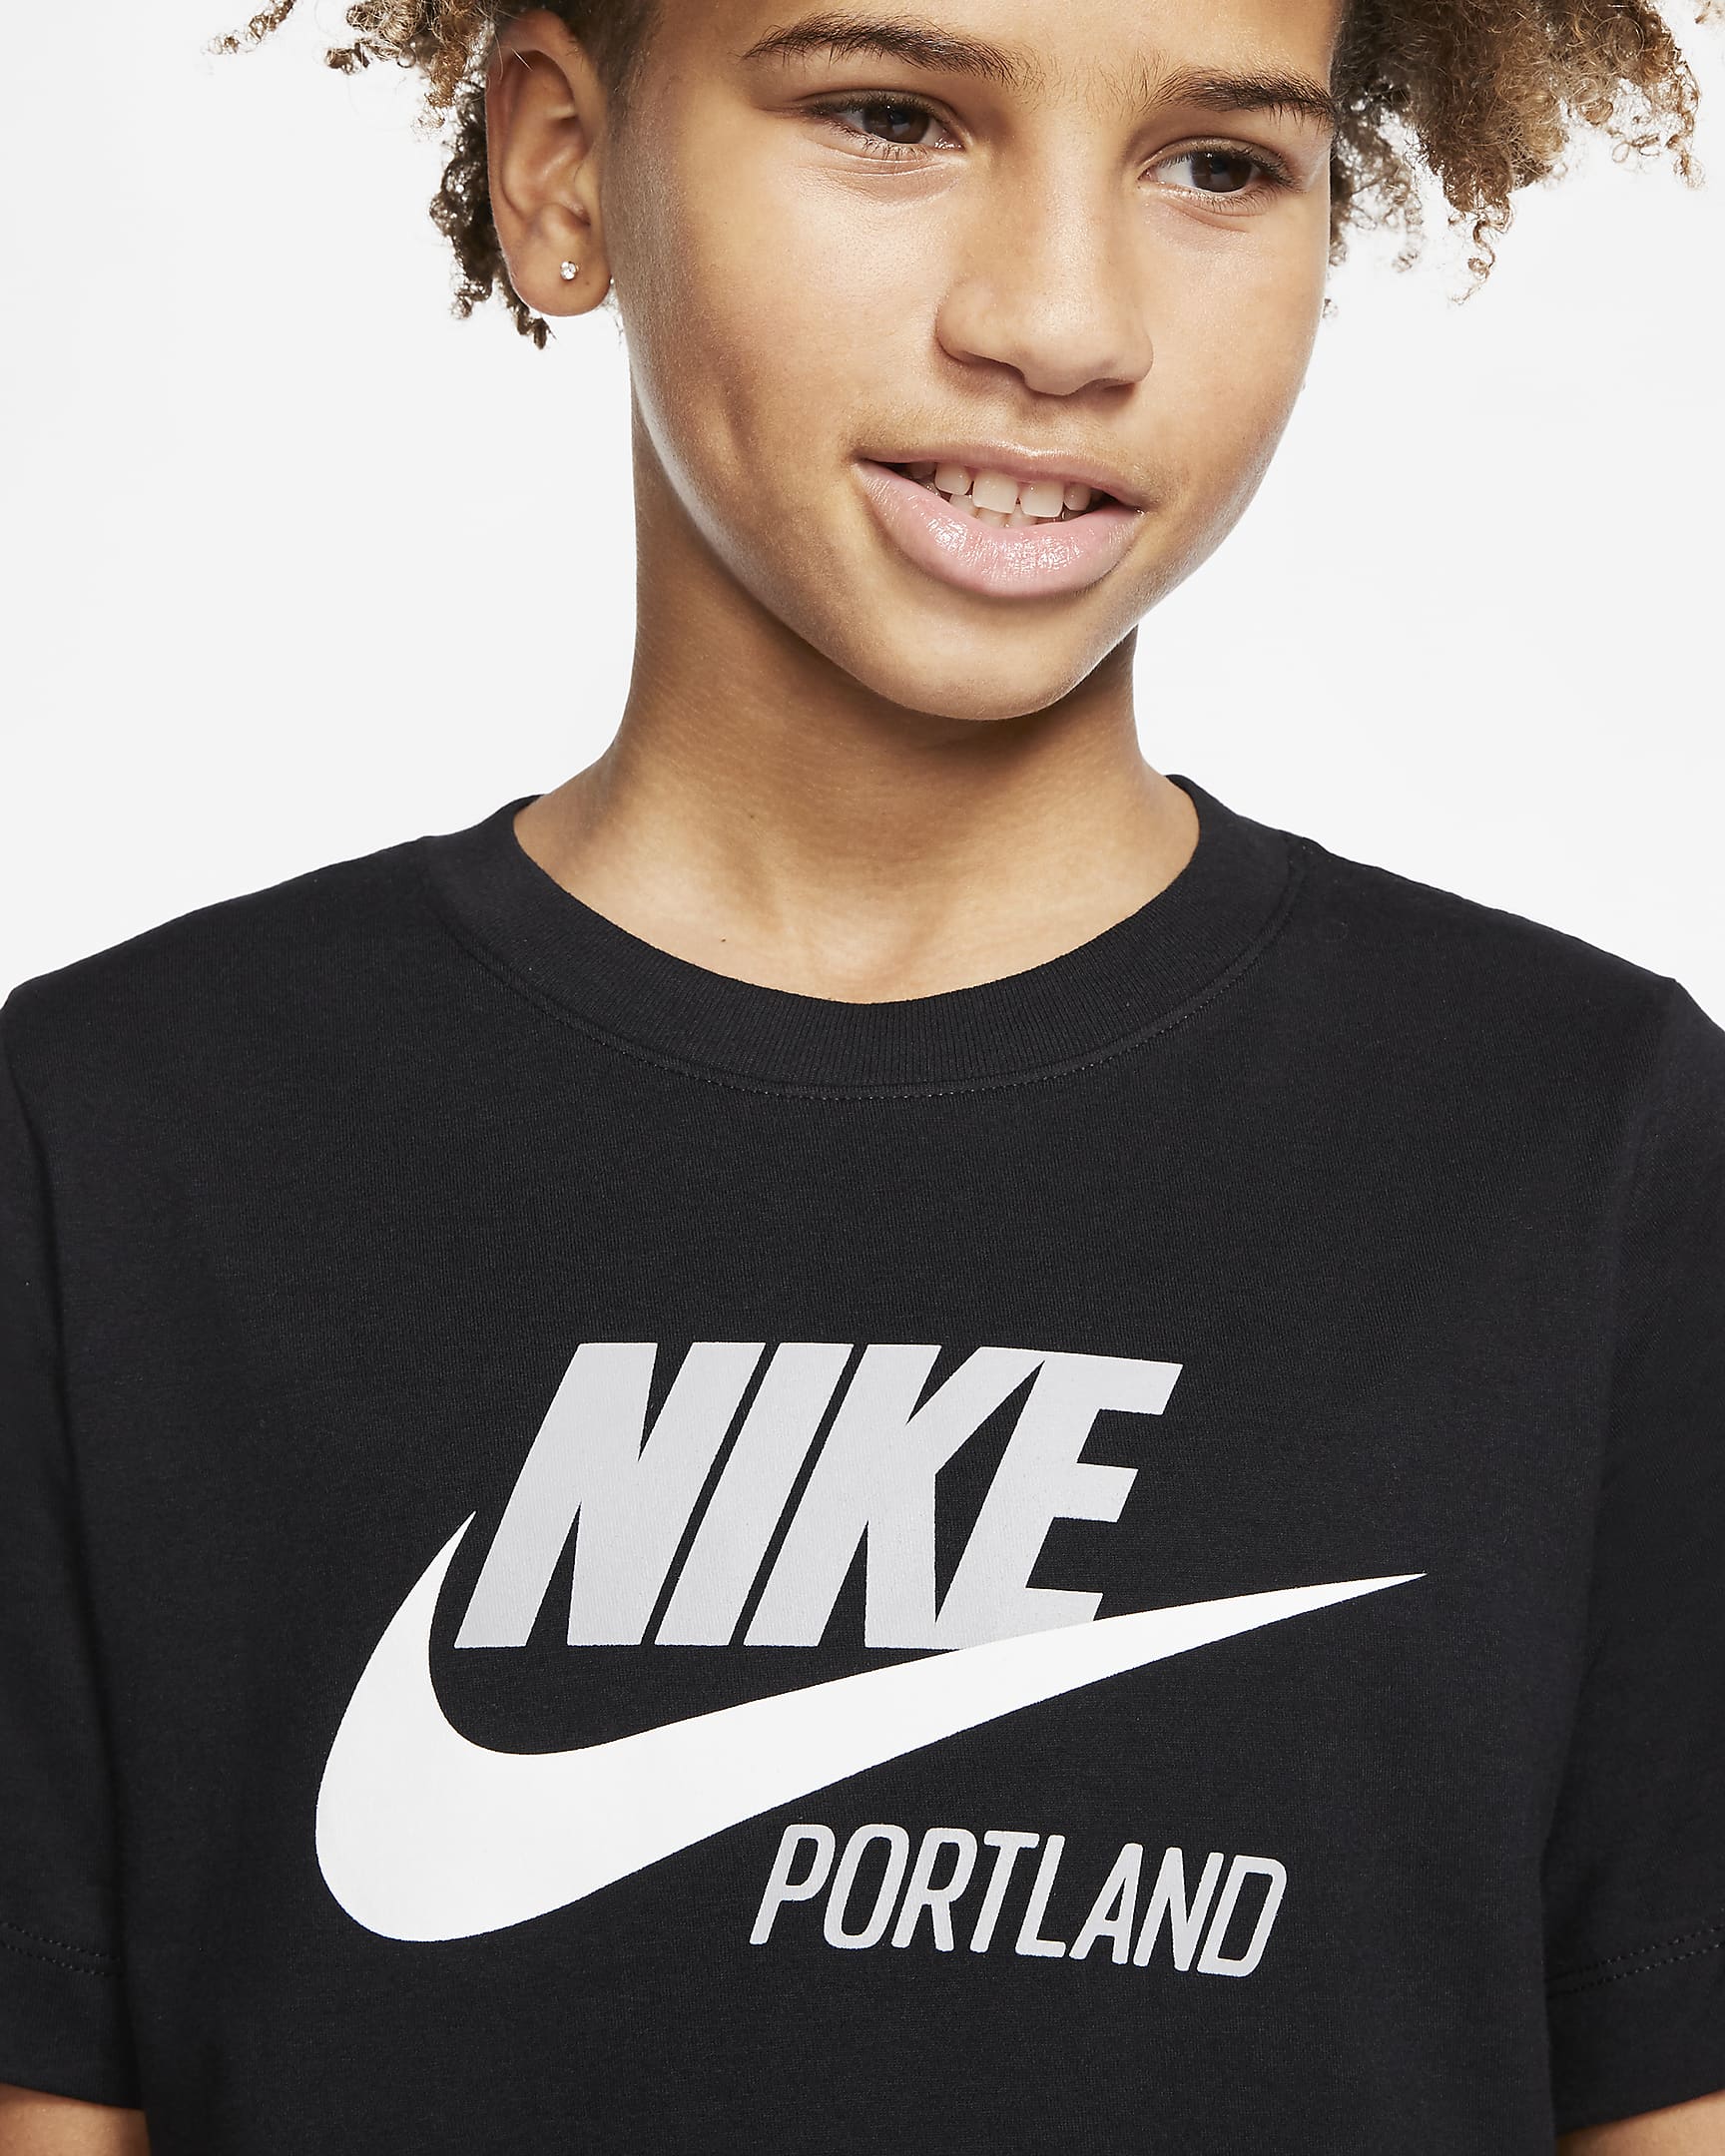 Playera para niños talla grande Nike Sportswear Portland. Nike.com